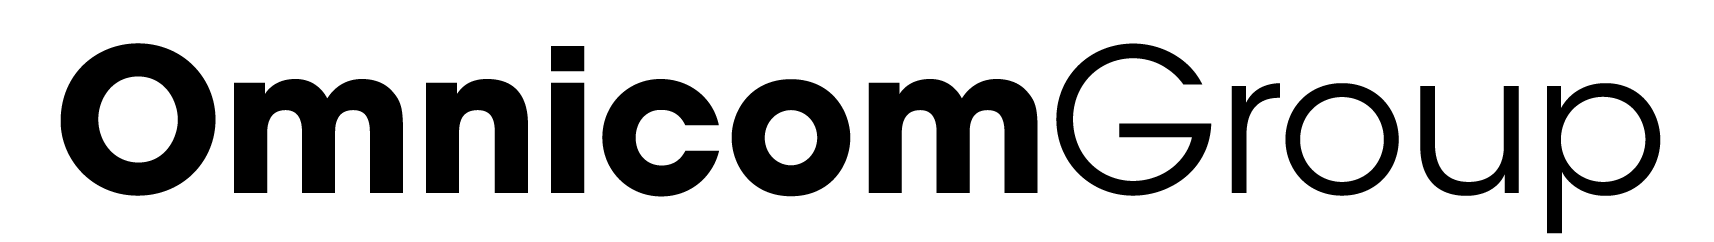 omnicom media group omg logo